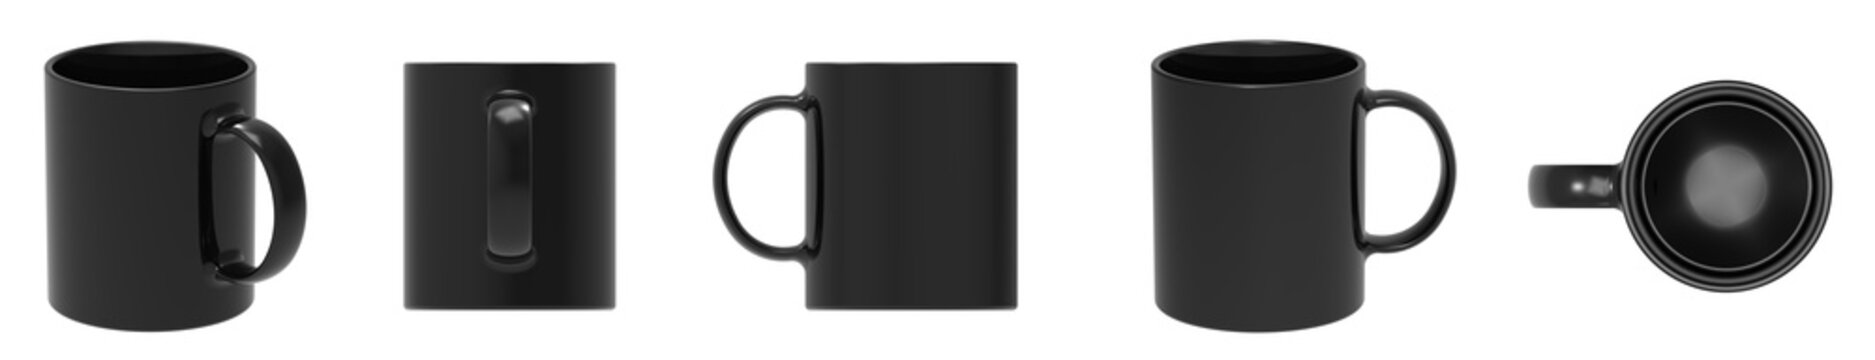 Blank black ceramic mug cup 5 view on white background